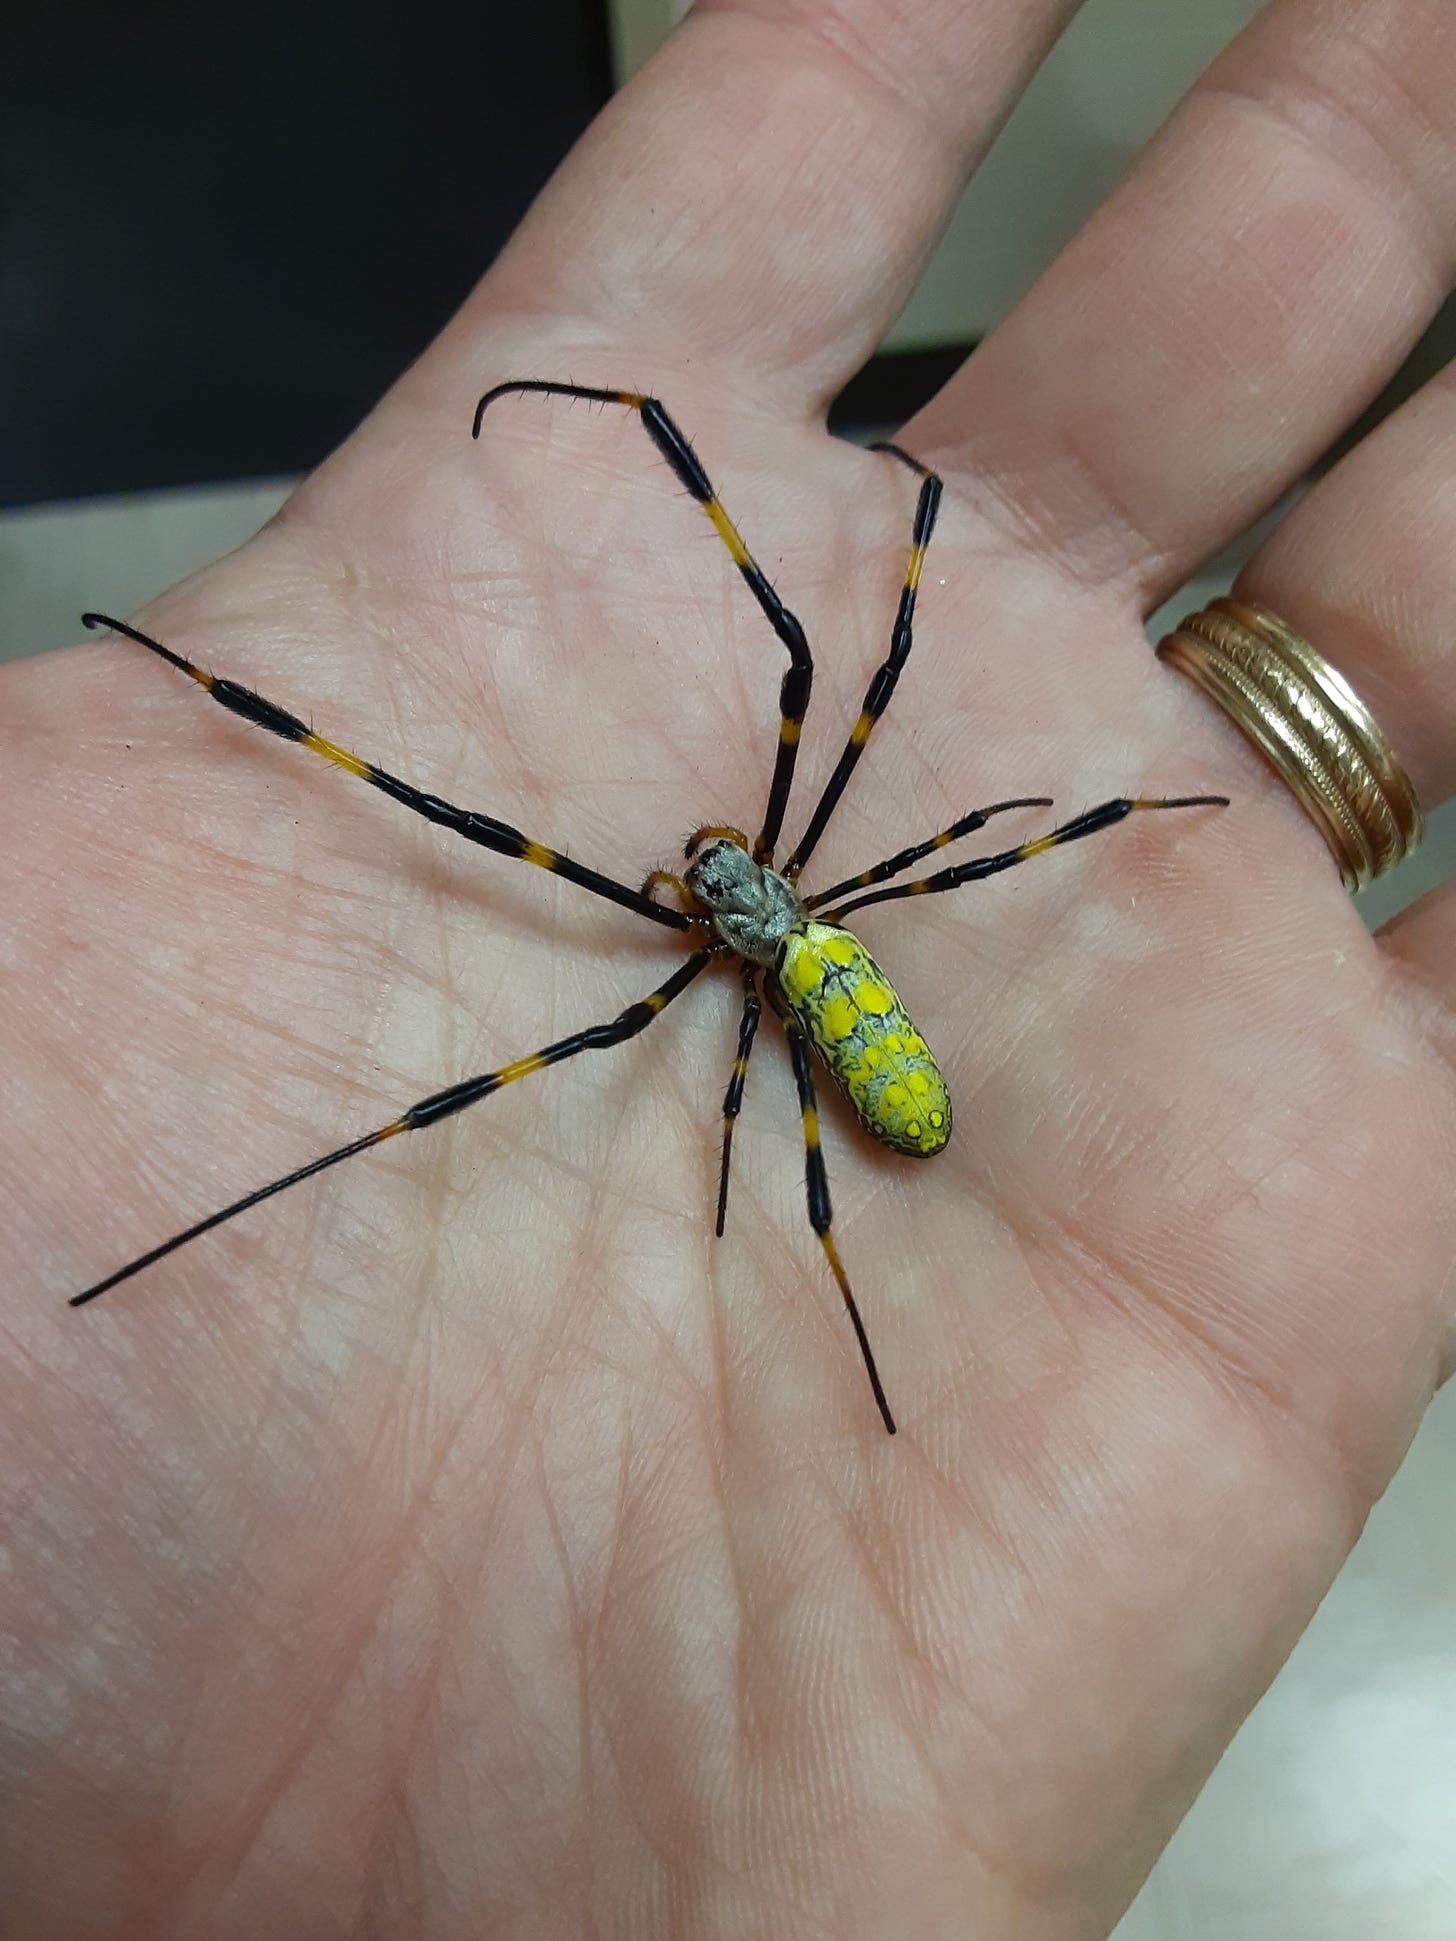 Giant 'flying' Joro spiders could soon invade N.J., N.Y. and Pa ...